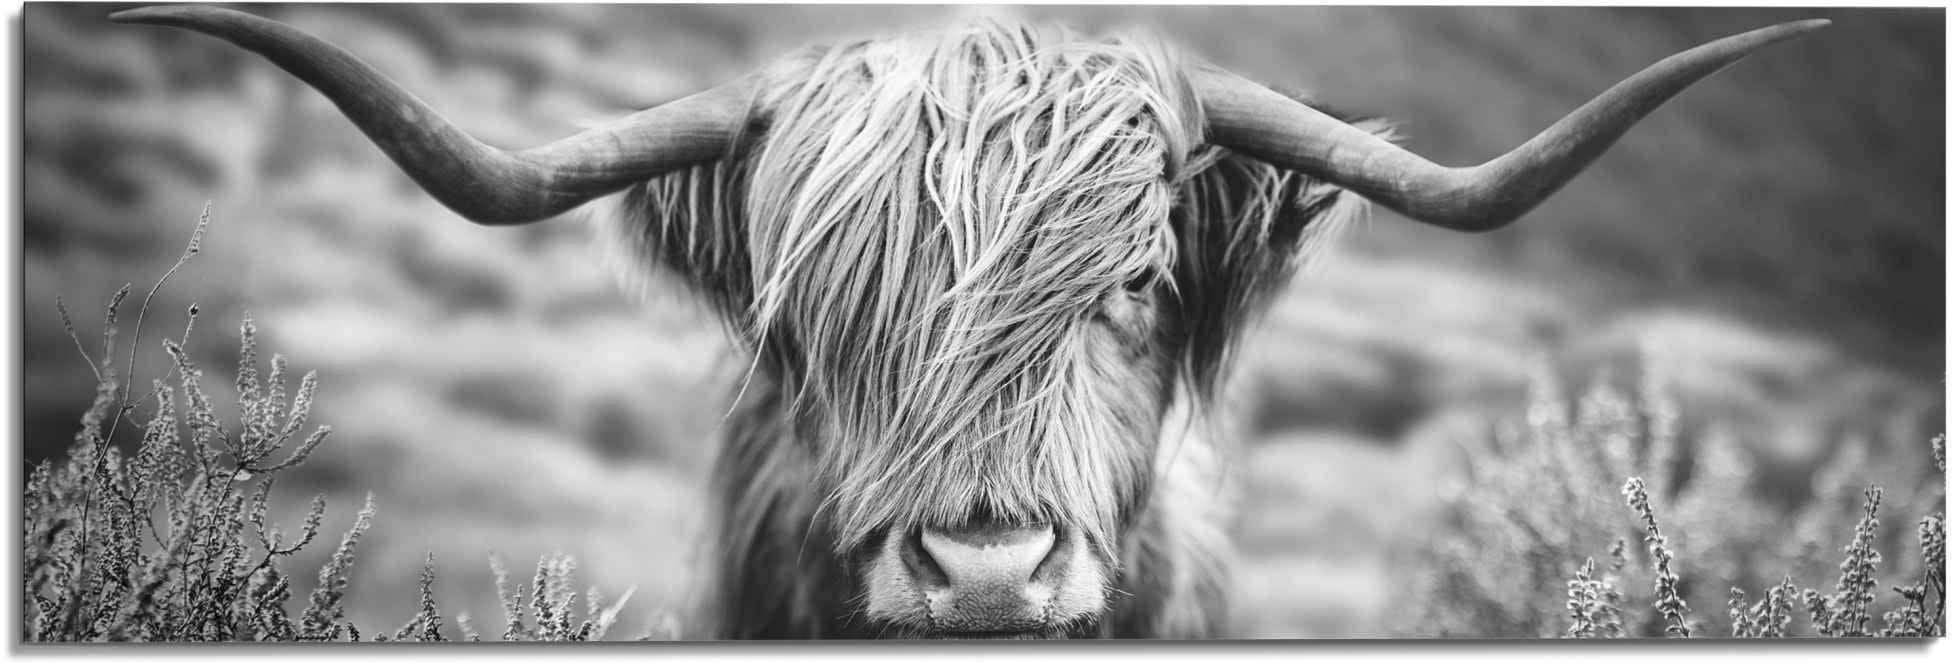 Reinders! Wandbild »Wandbild - Kuh, bequem St.) Bulle Highlander - Bild«, (1 Nahaufnahme kaufen Hochlandrind Tiermotiv